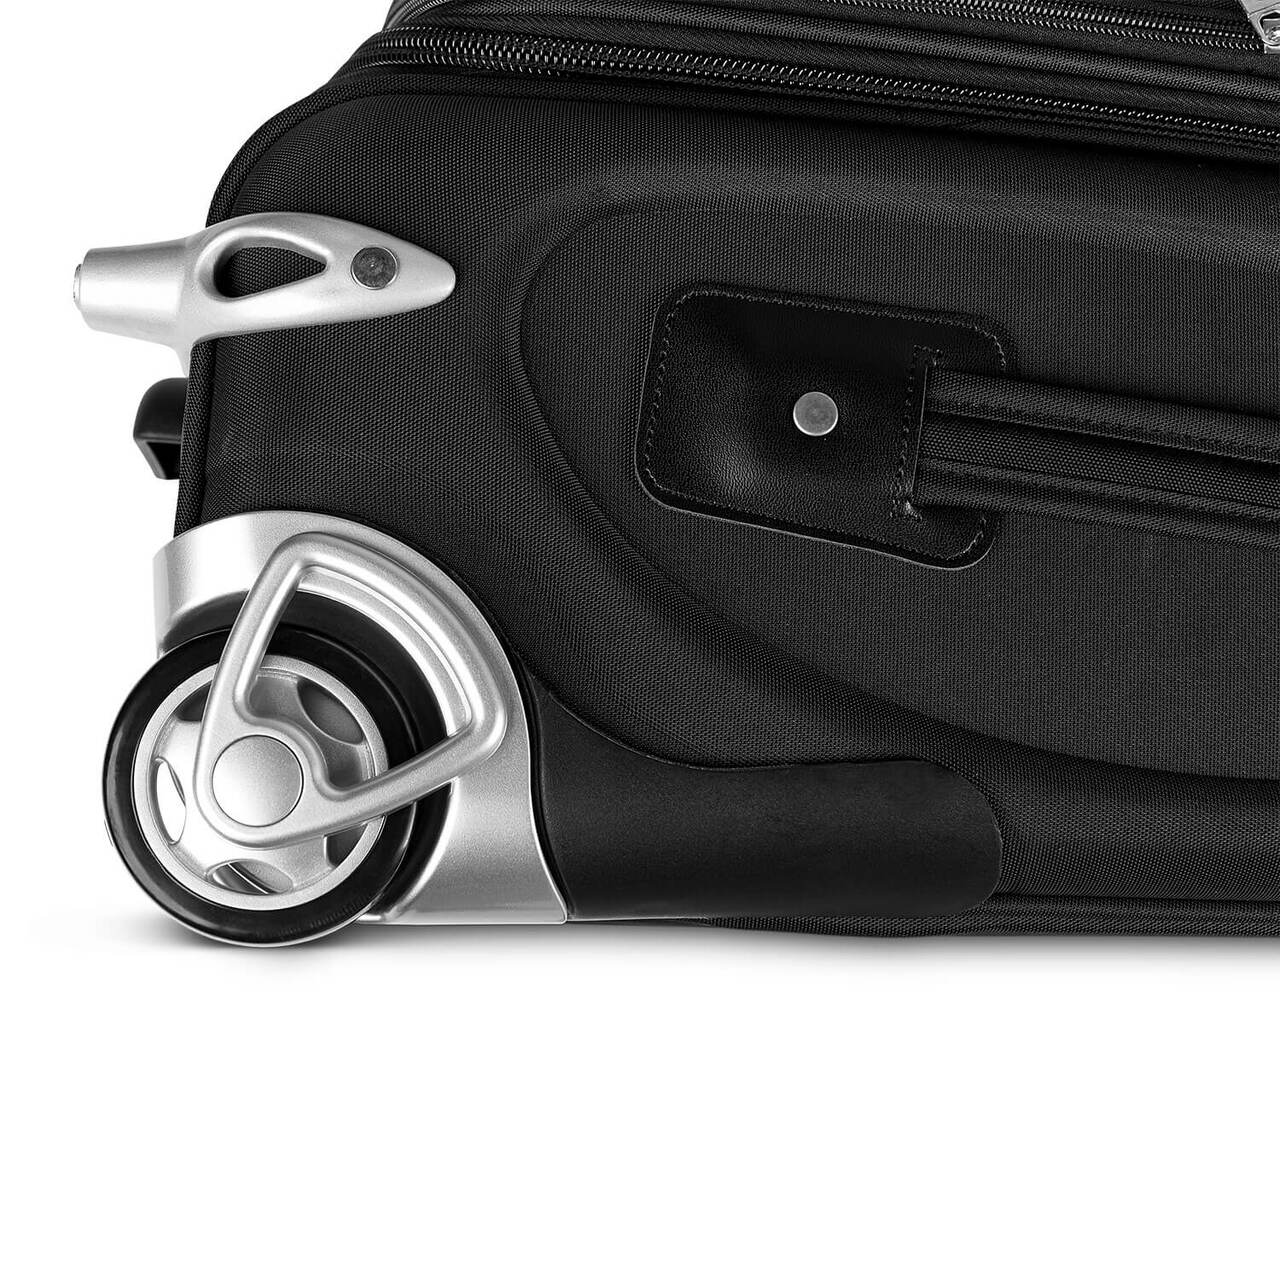 Hokies Carry On Luggage | Virginia Tech Hokies Rolling Carry On Luggage